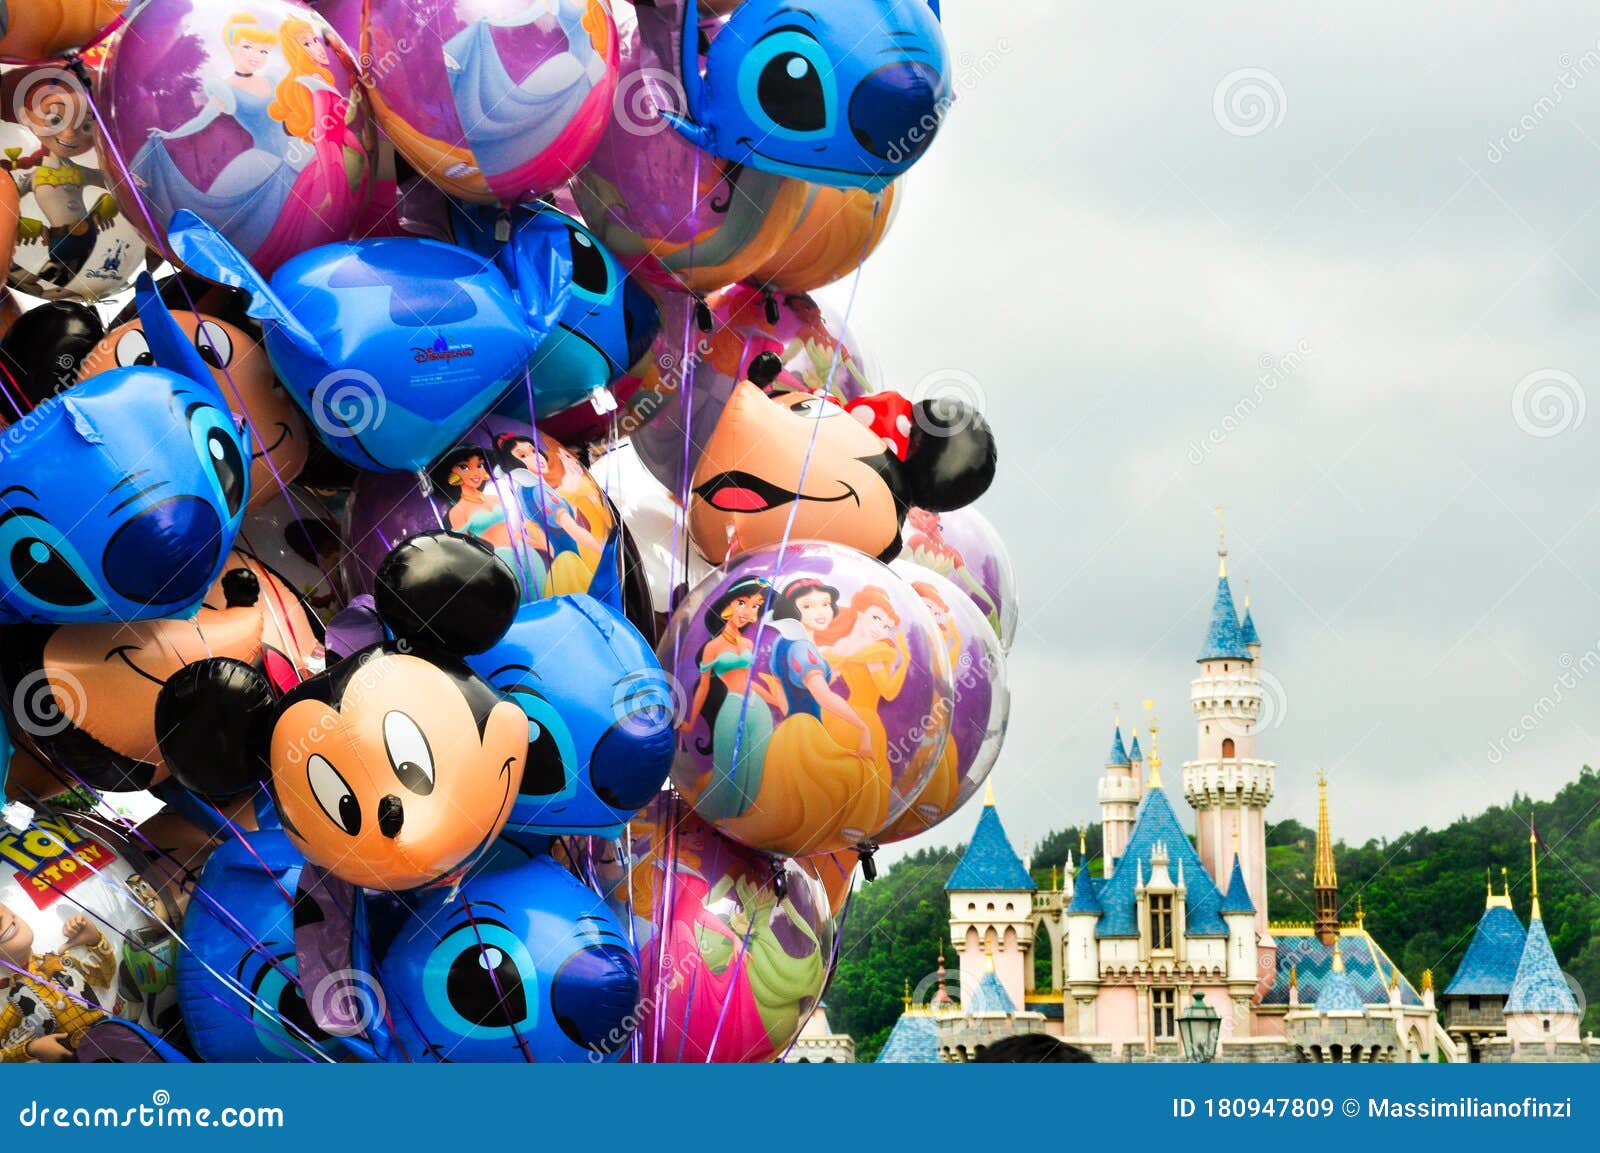 https://thumbs.dreamstime.com/z/disney-balloons-mickey-mouse-disney-balloons-entrance-disneyland-hong-kong-180947809.jpg